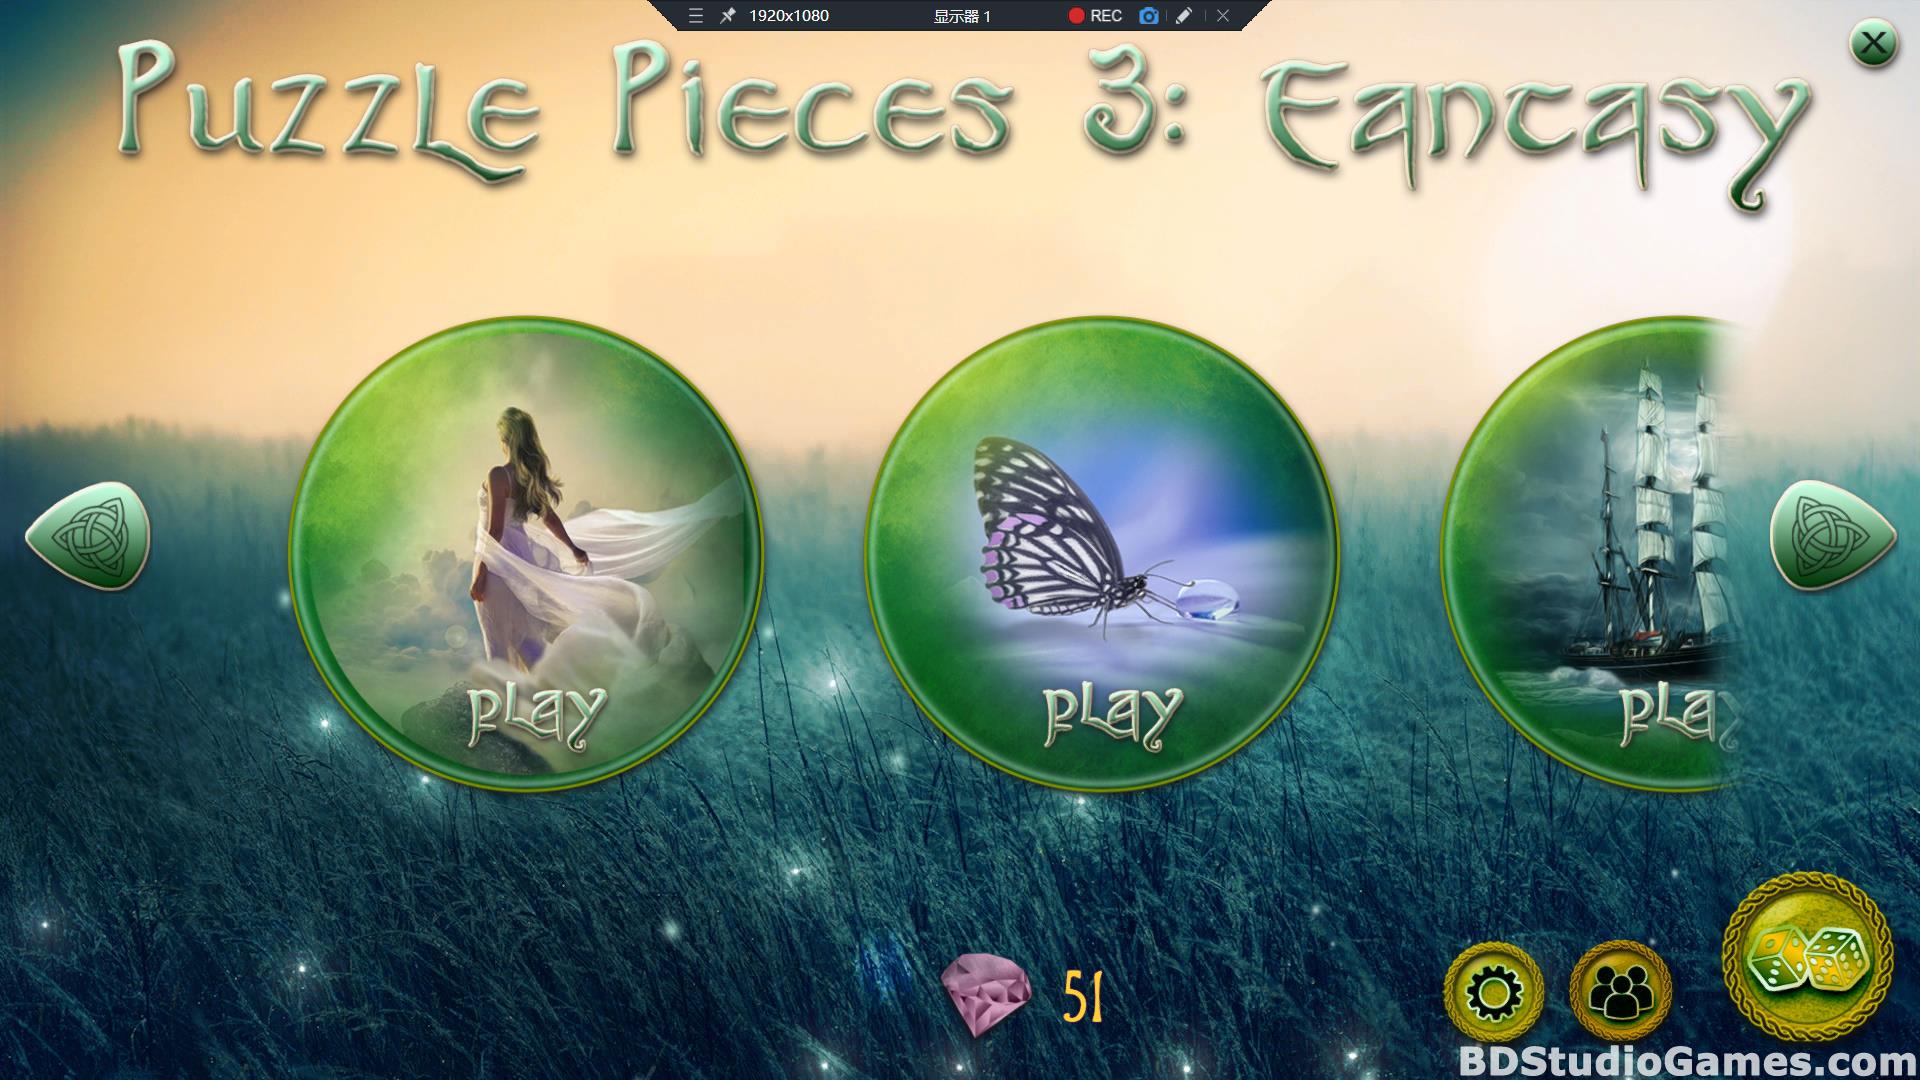 Puzzle Pieces 3: Fantasy Free Download Screenshots 01